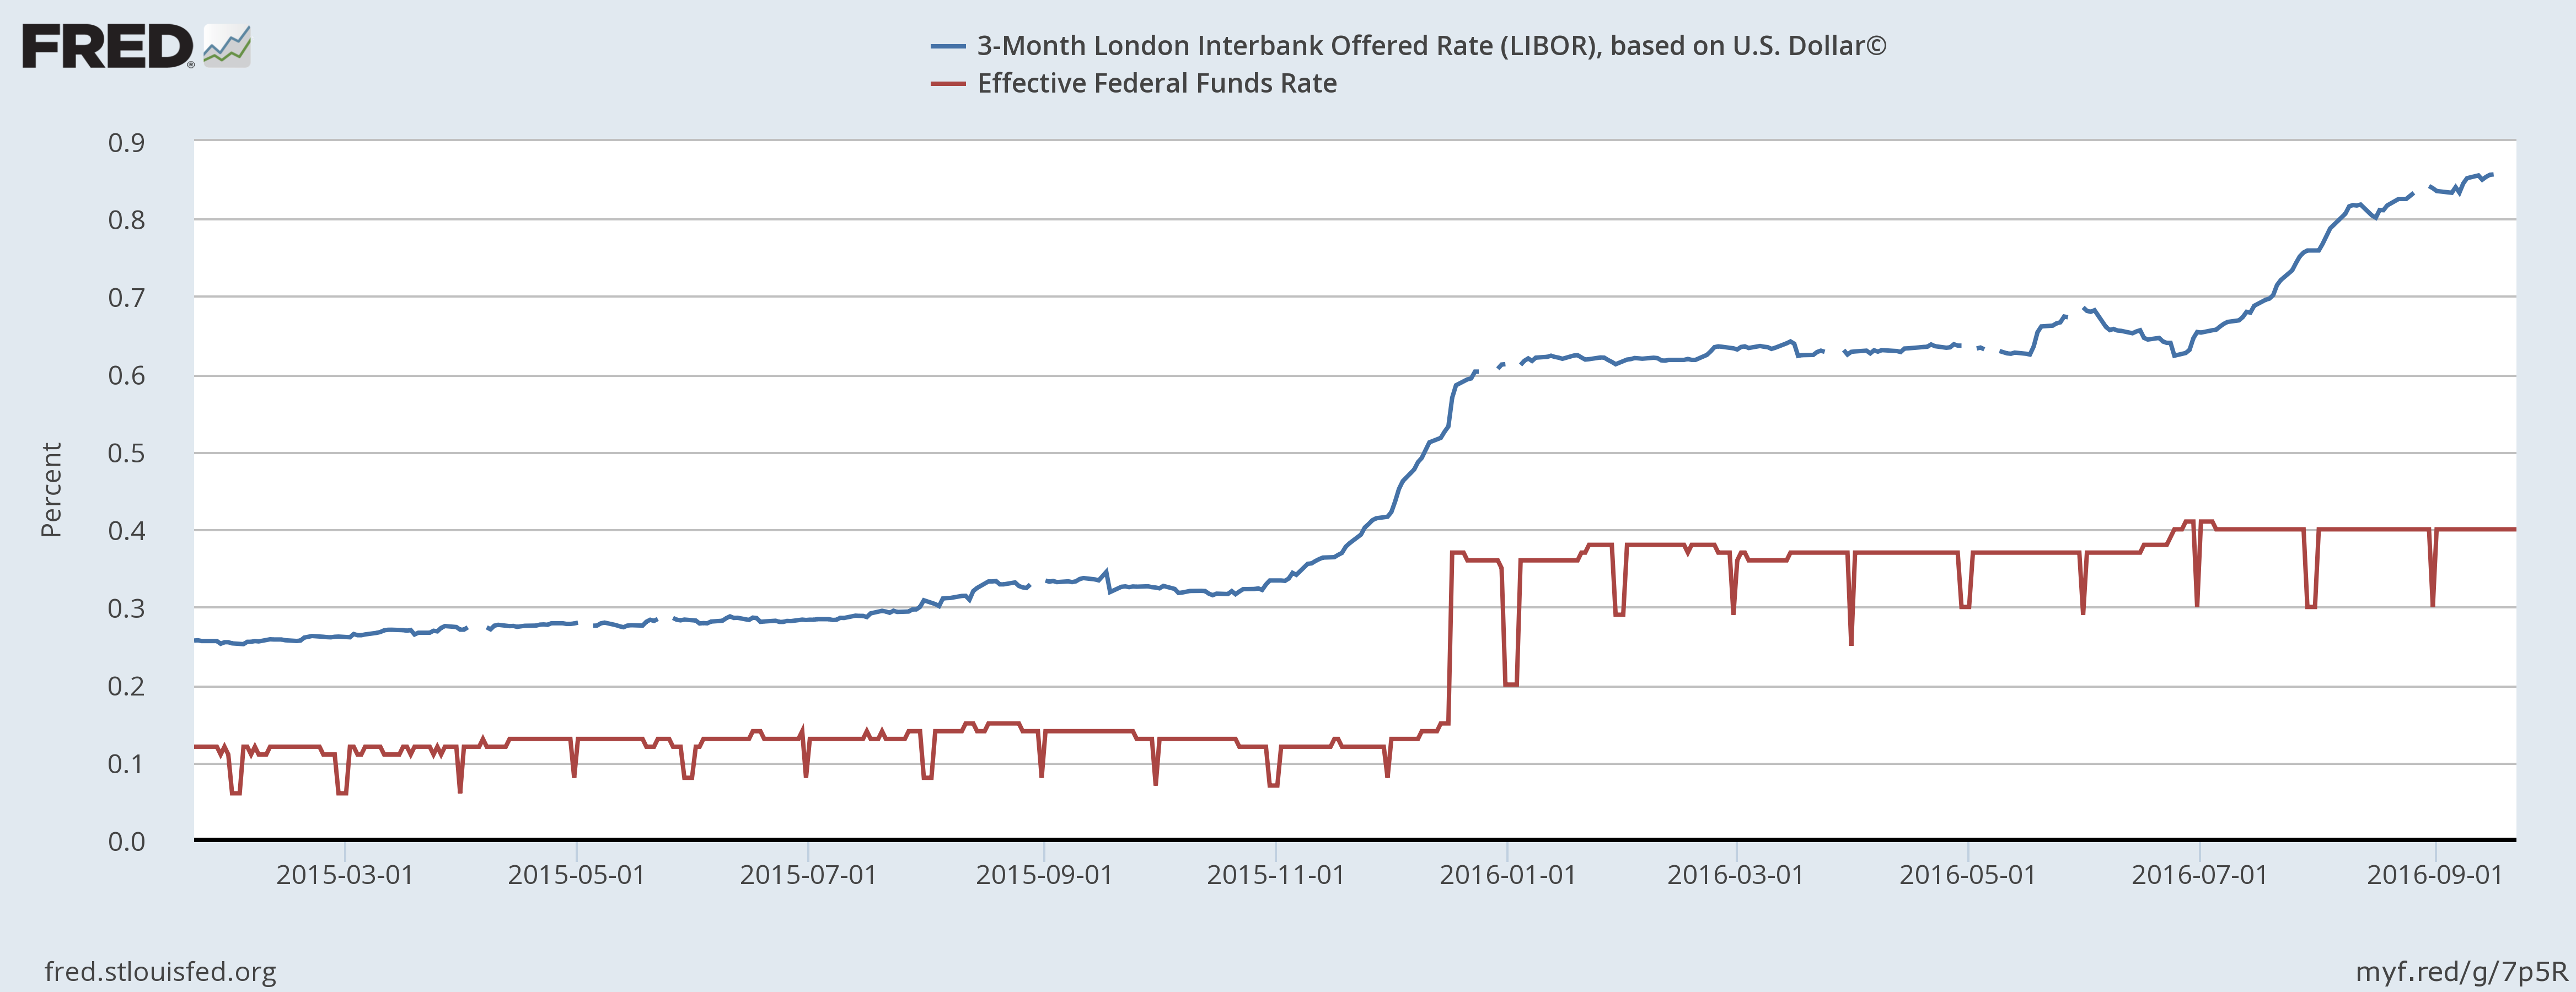 Liborsatz US Dollar vs. effektive Funds-Rate - Endstand 23.09.2016